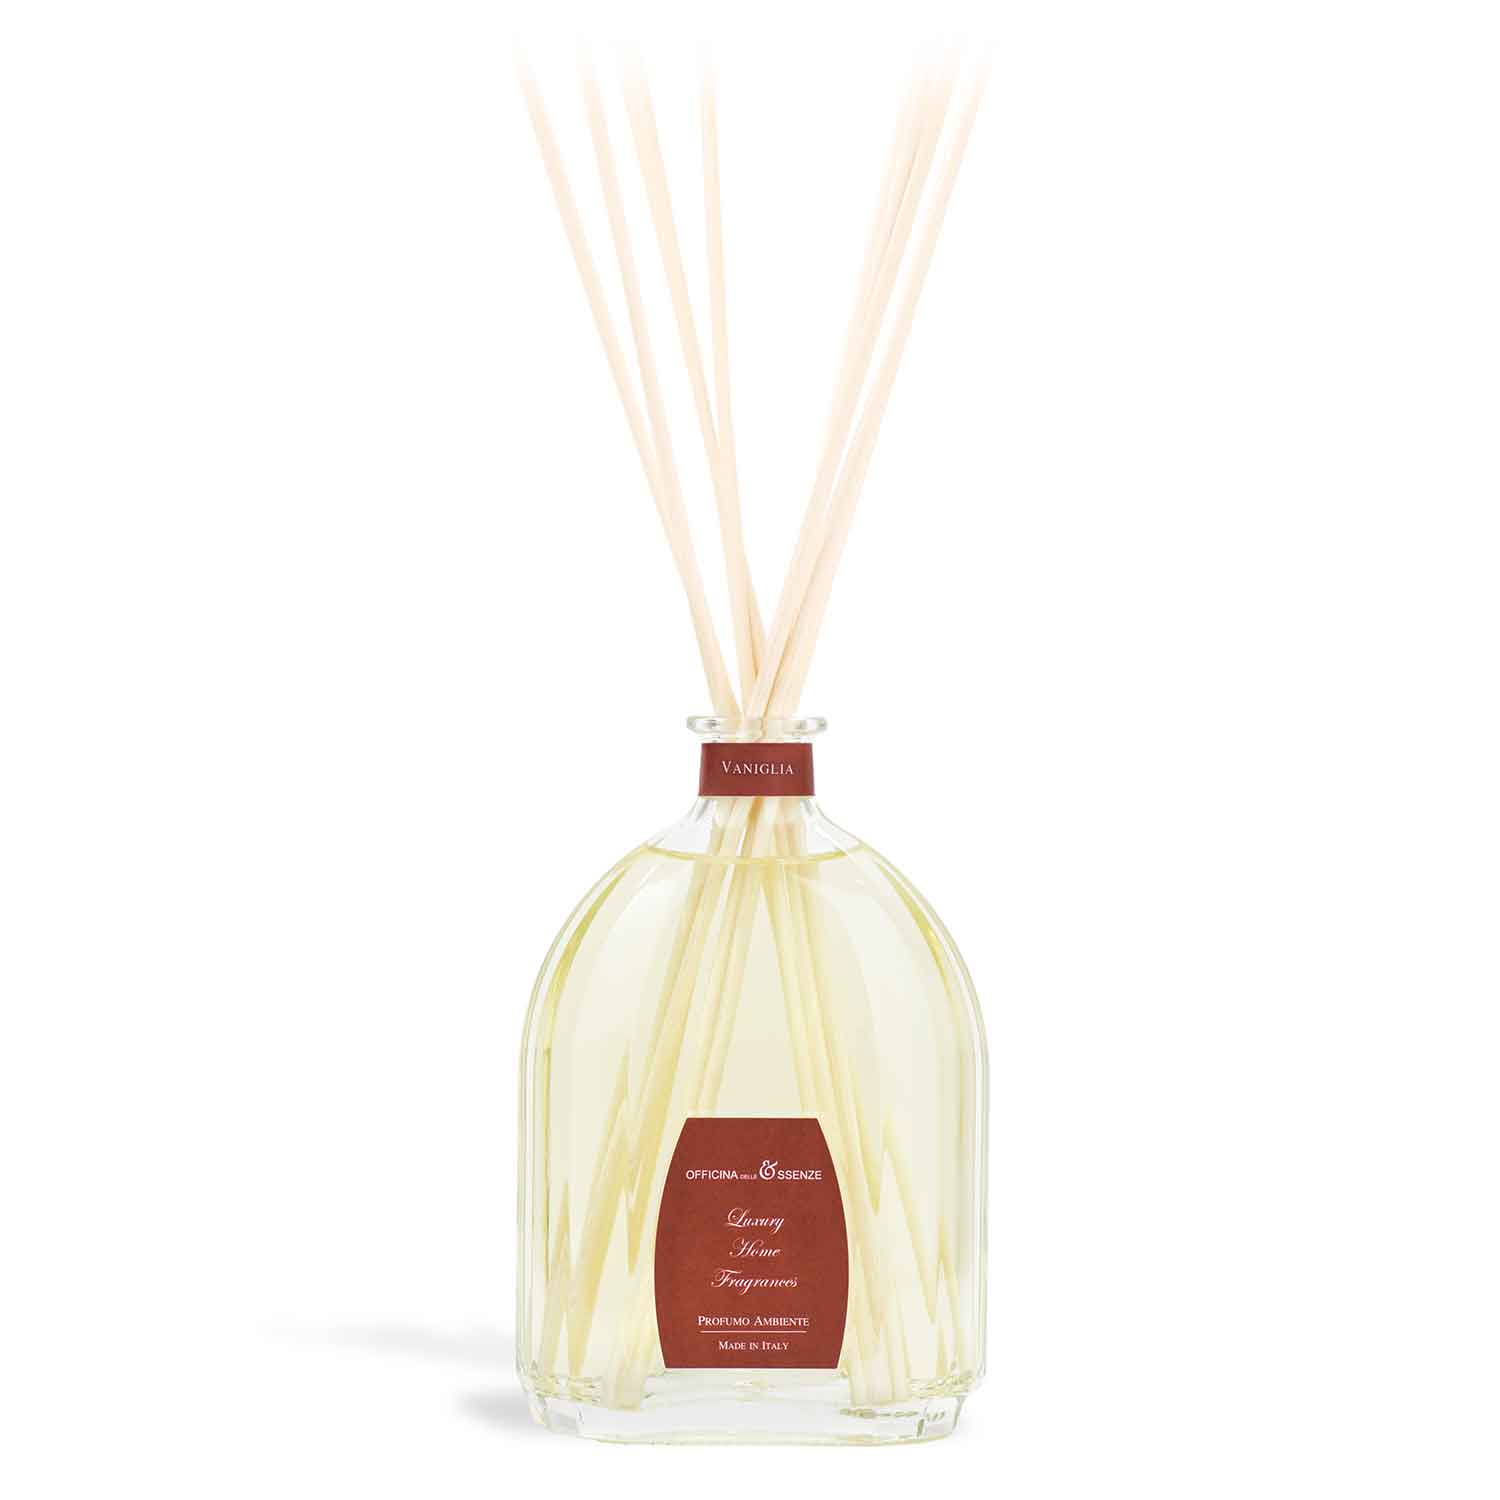 Vaniglia - Home fragrance diffuser with essential oils, 500 ml